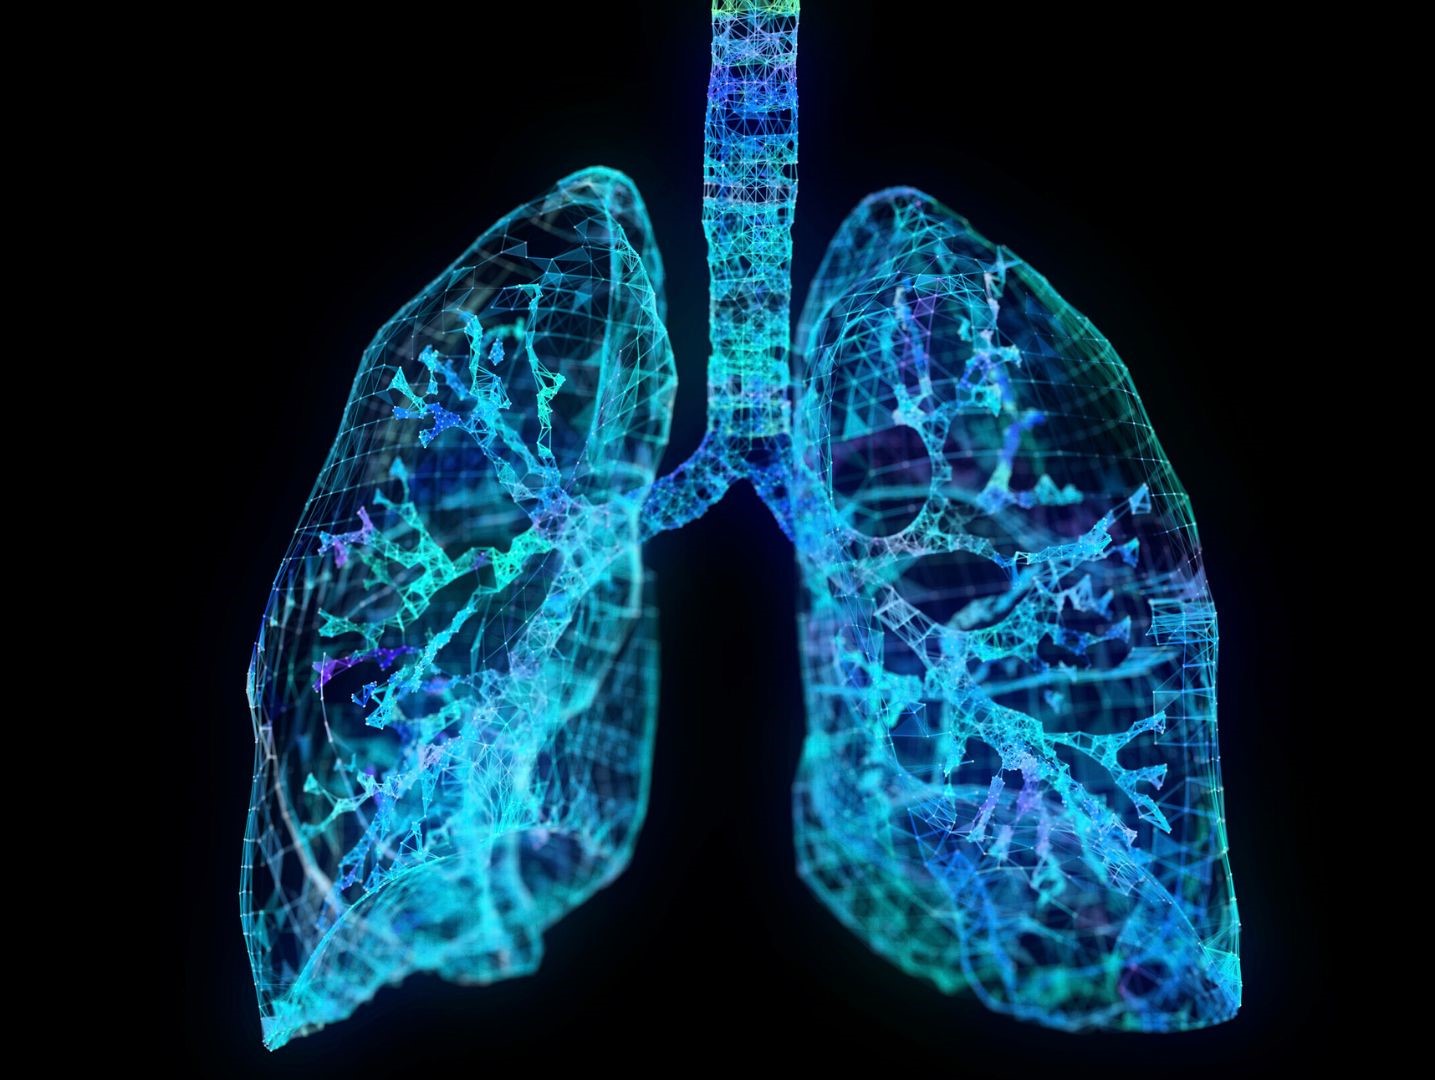 Digital image of lungs